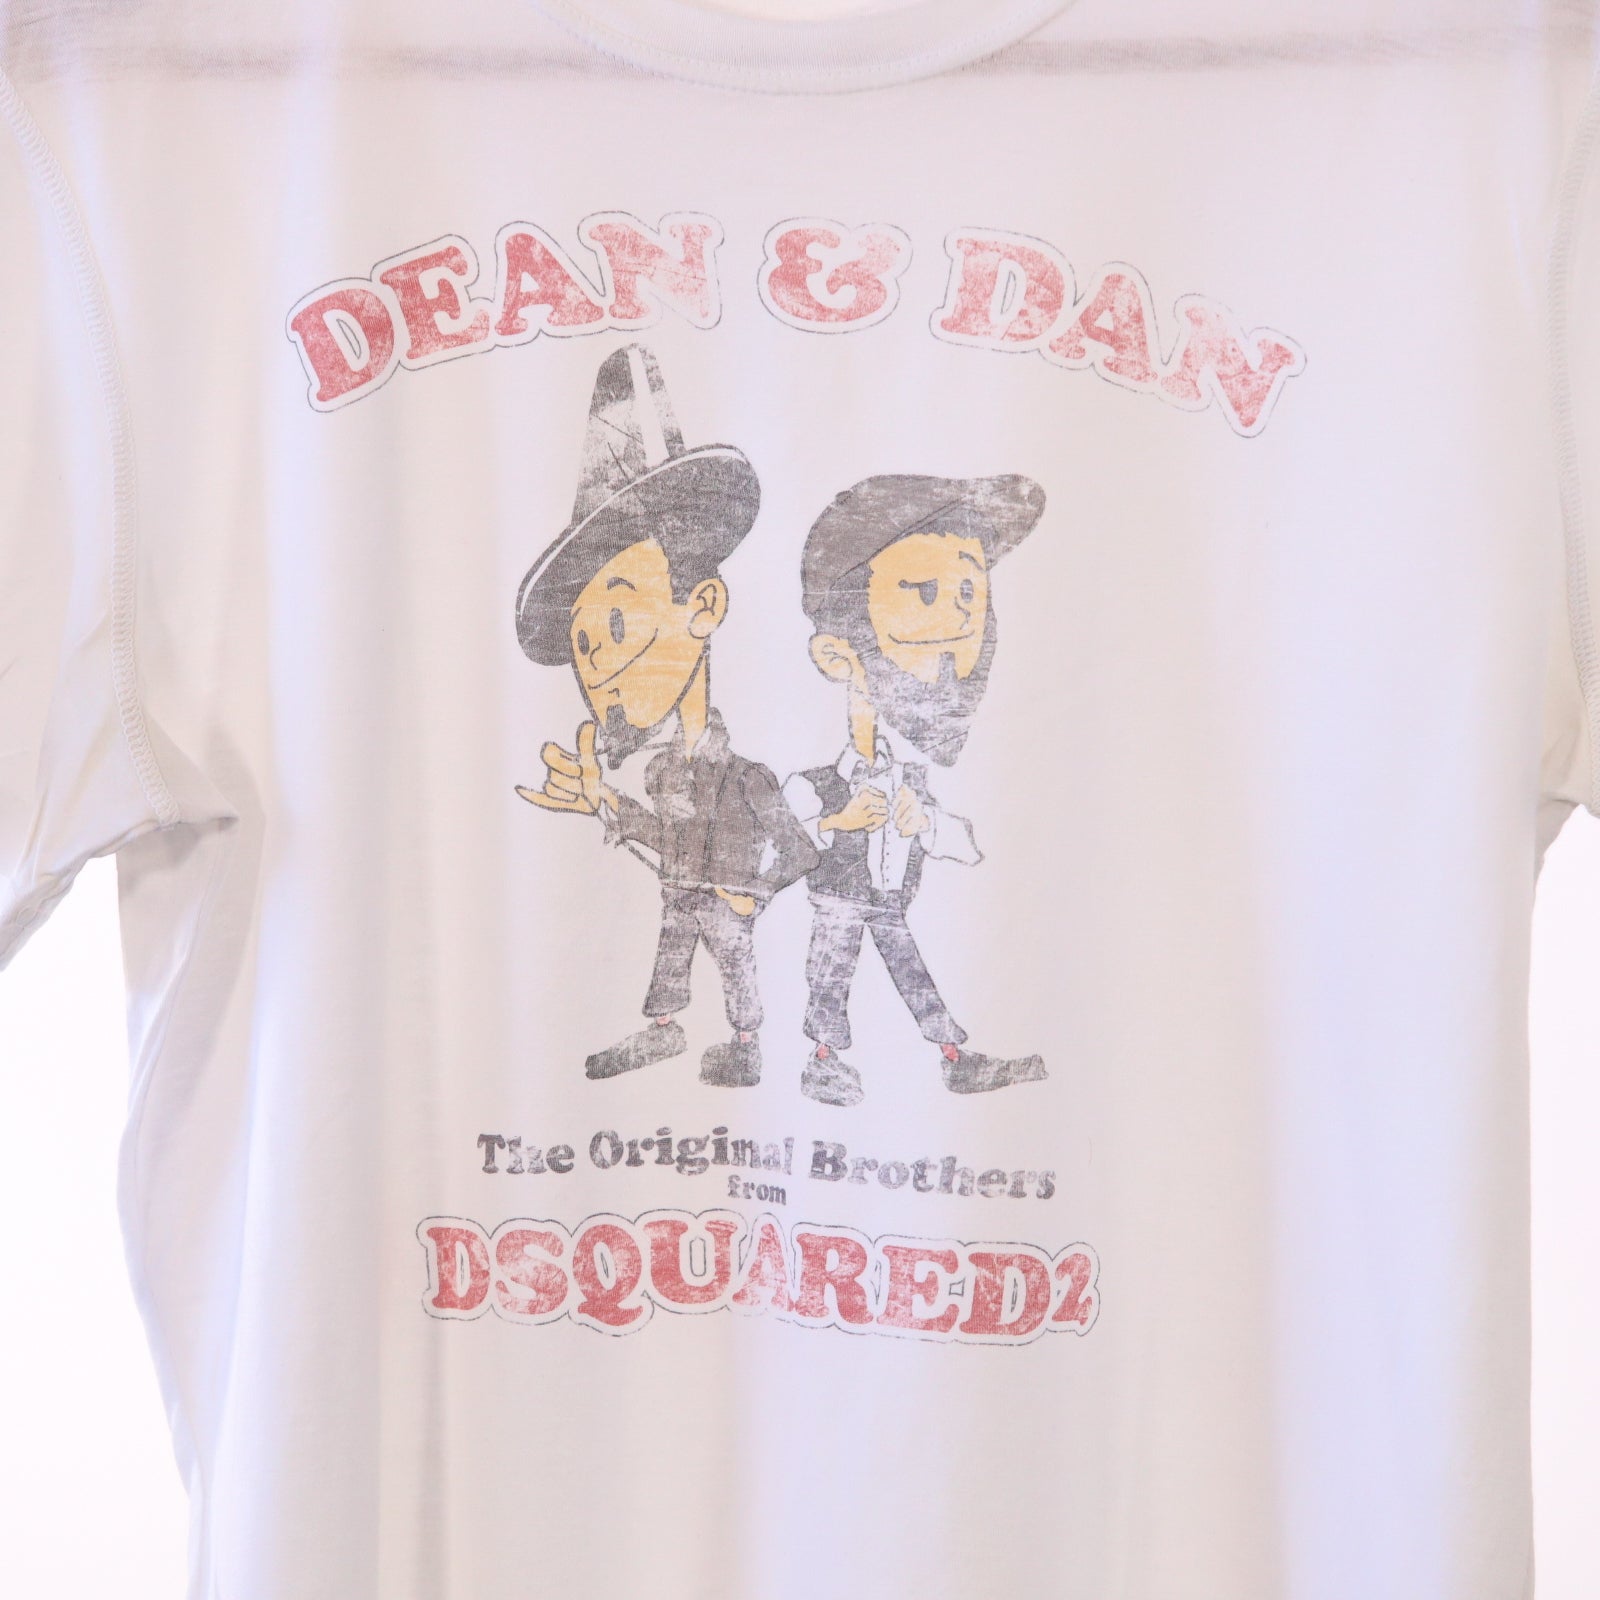 Dsquared2 T-shirt